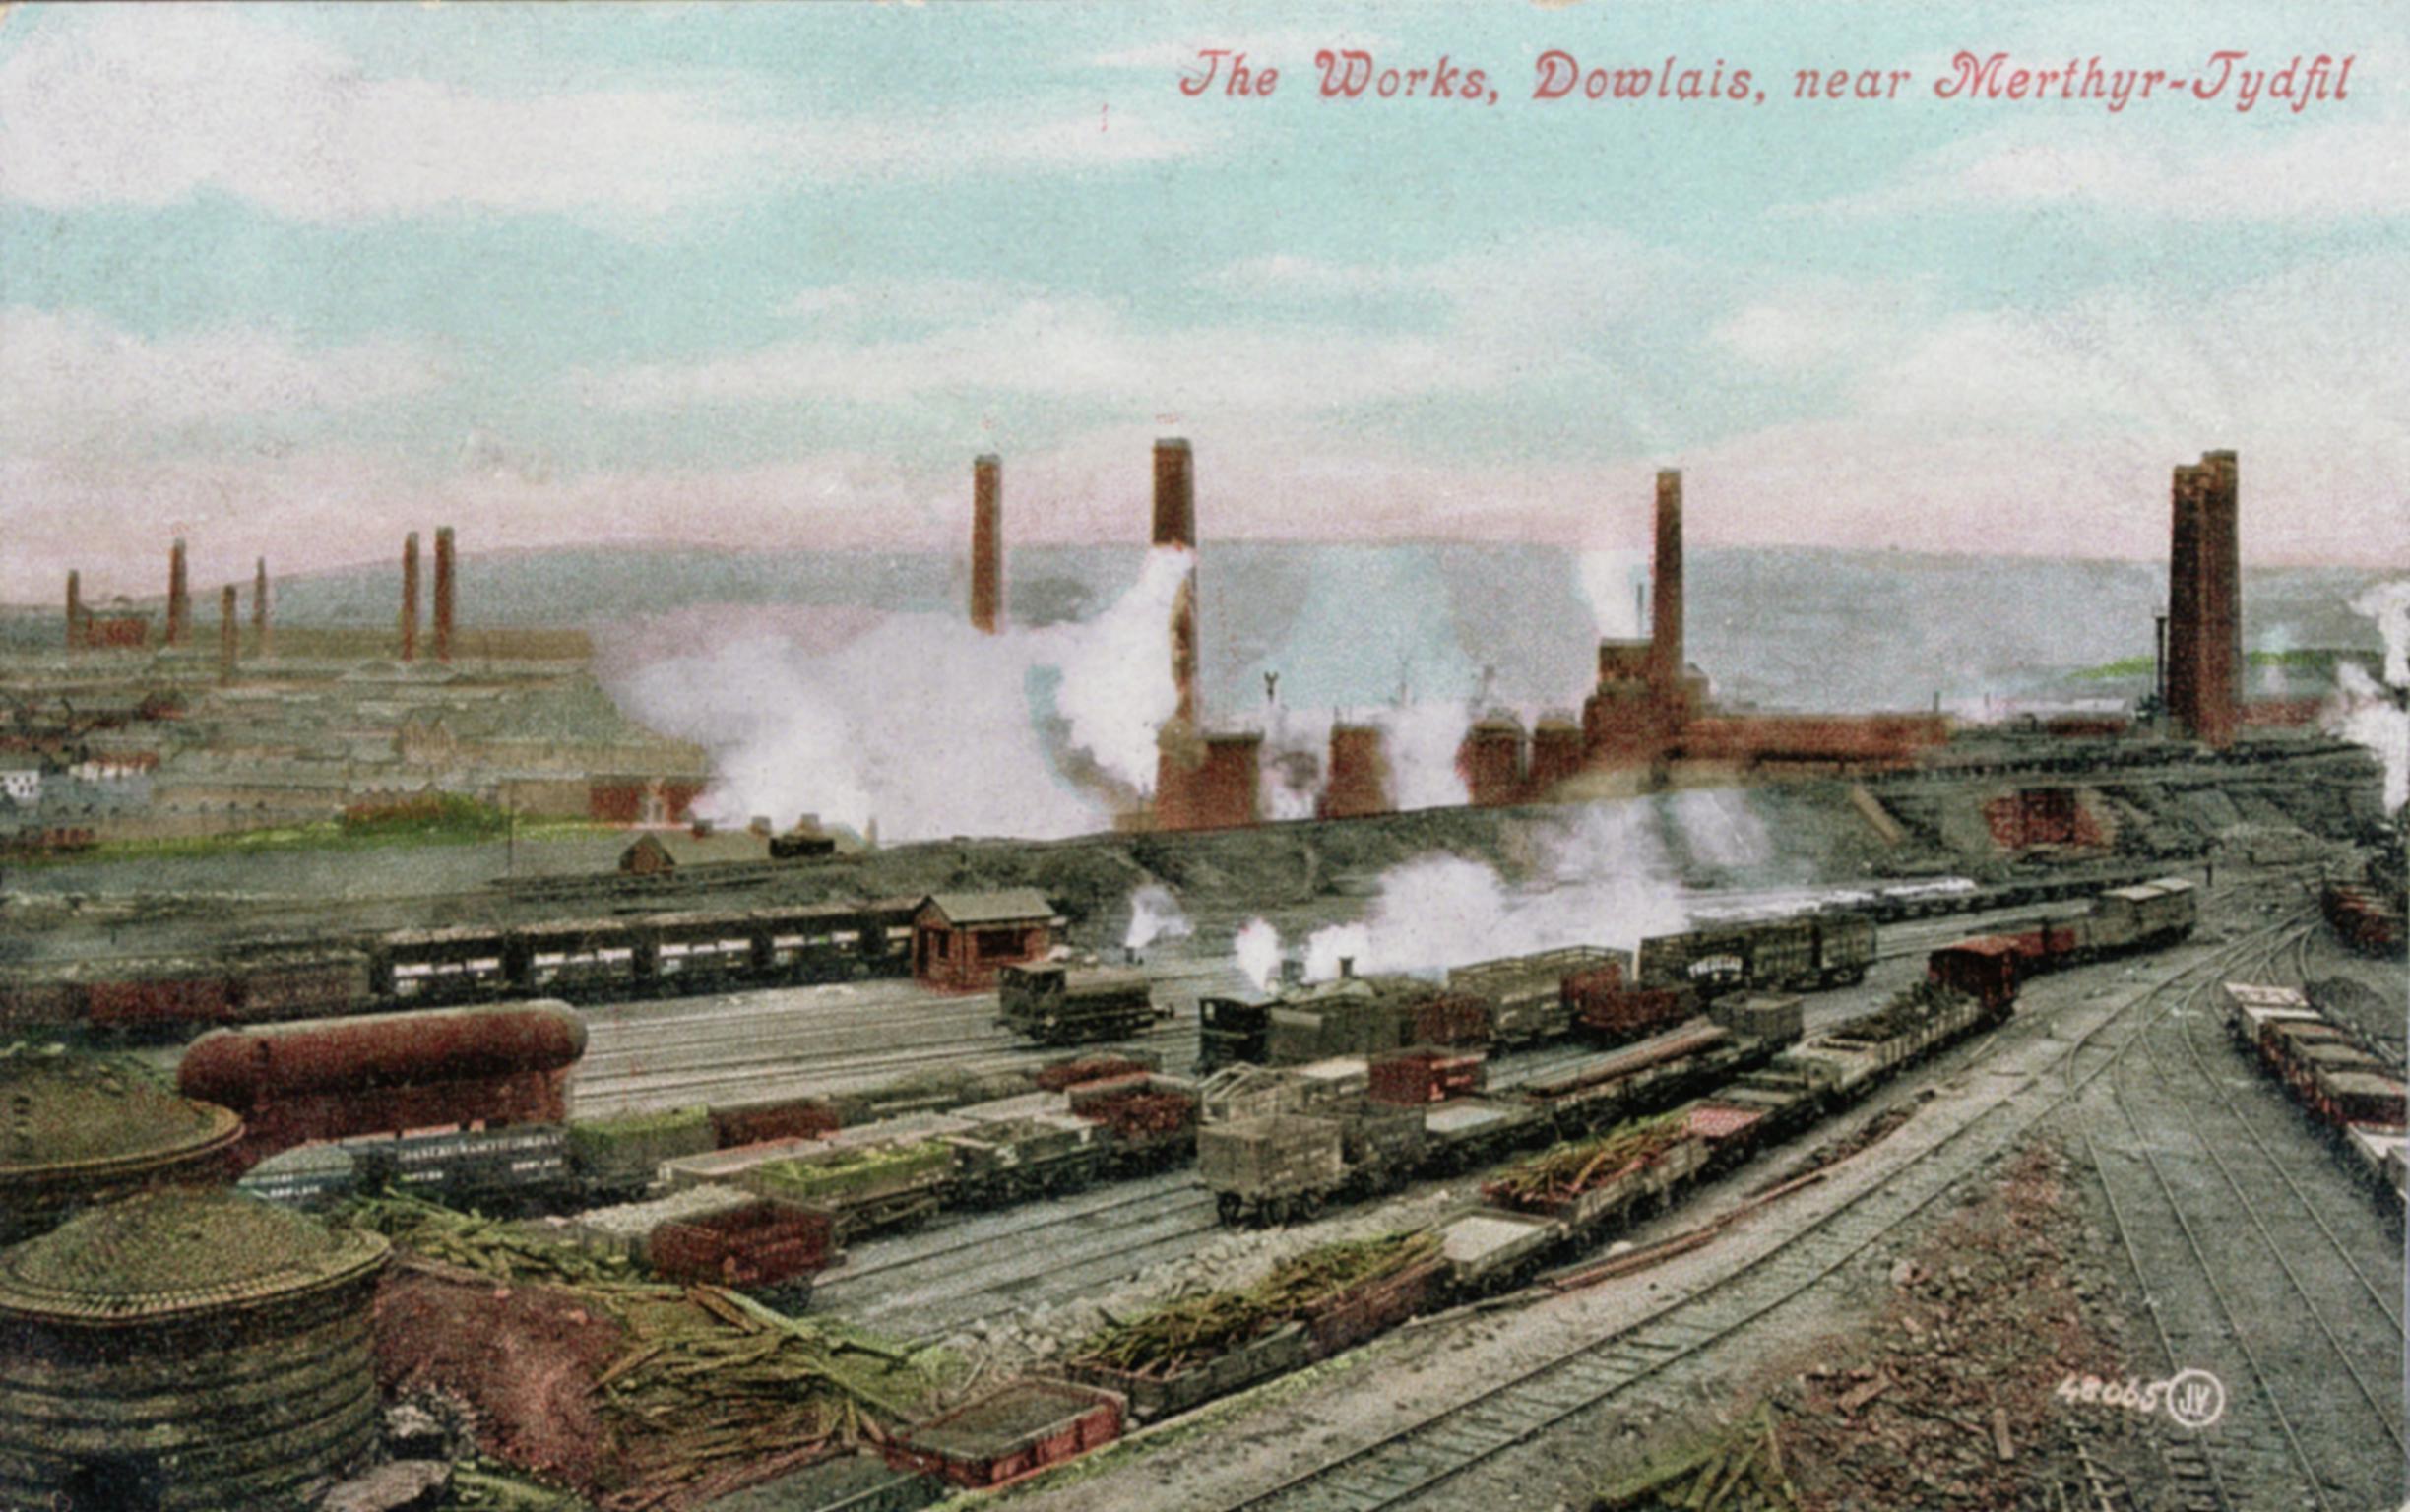 The Works, Dowlais, near Merthyr Tydfil (postcard)